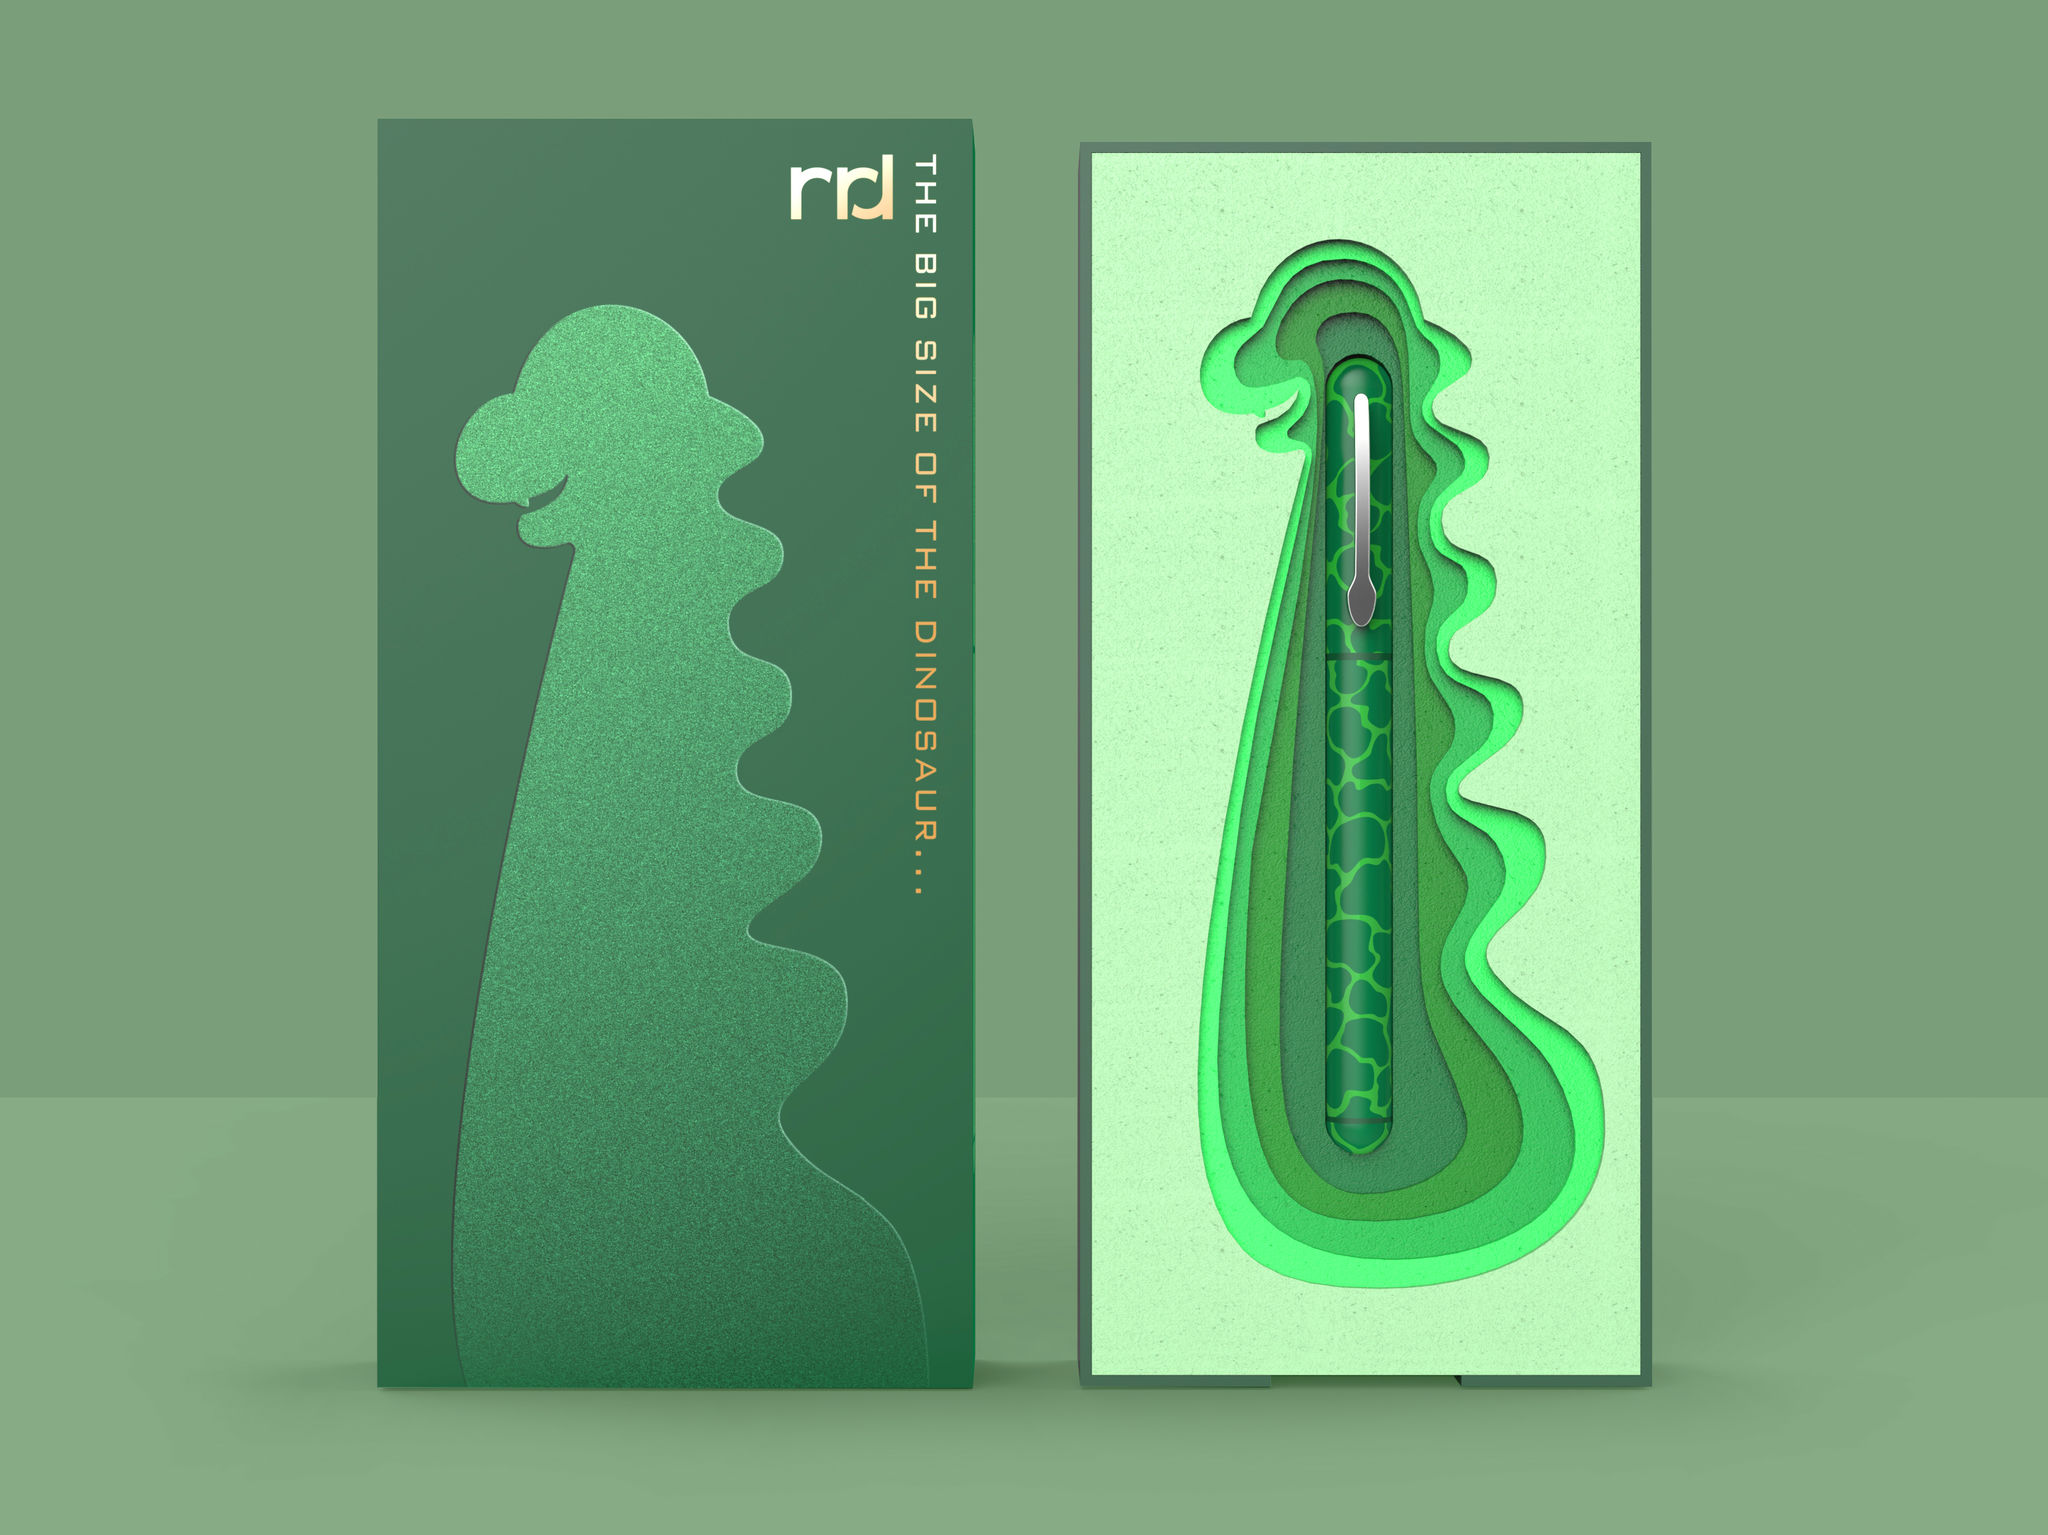 RRD Pen packaging